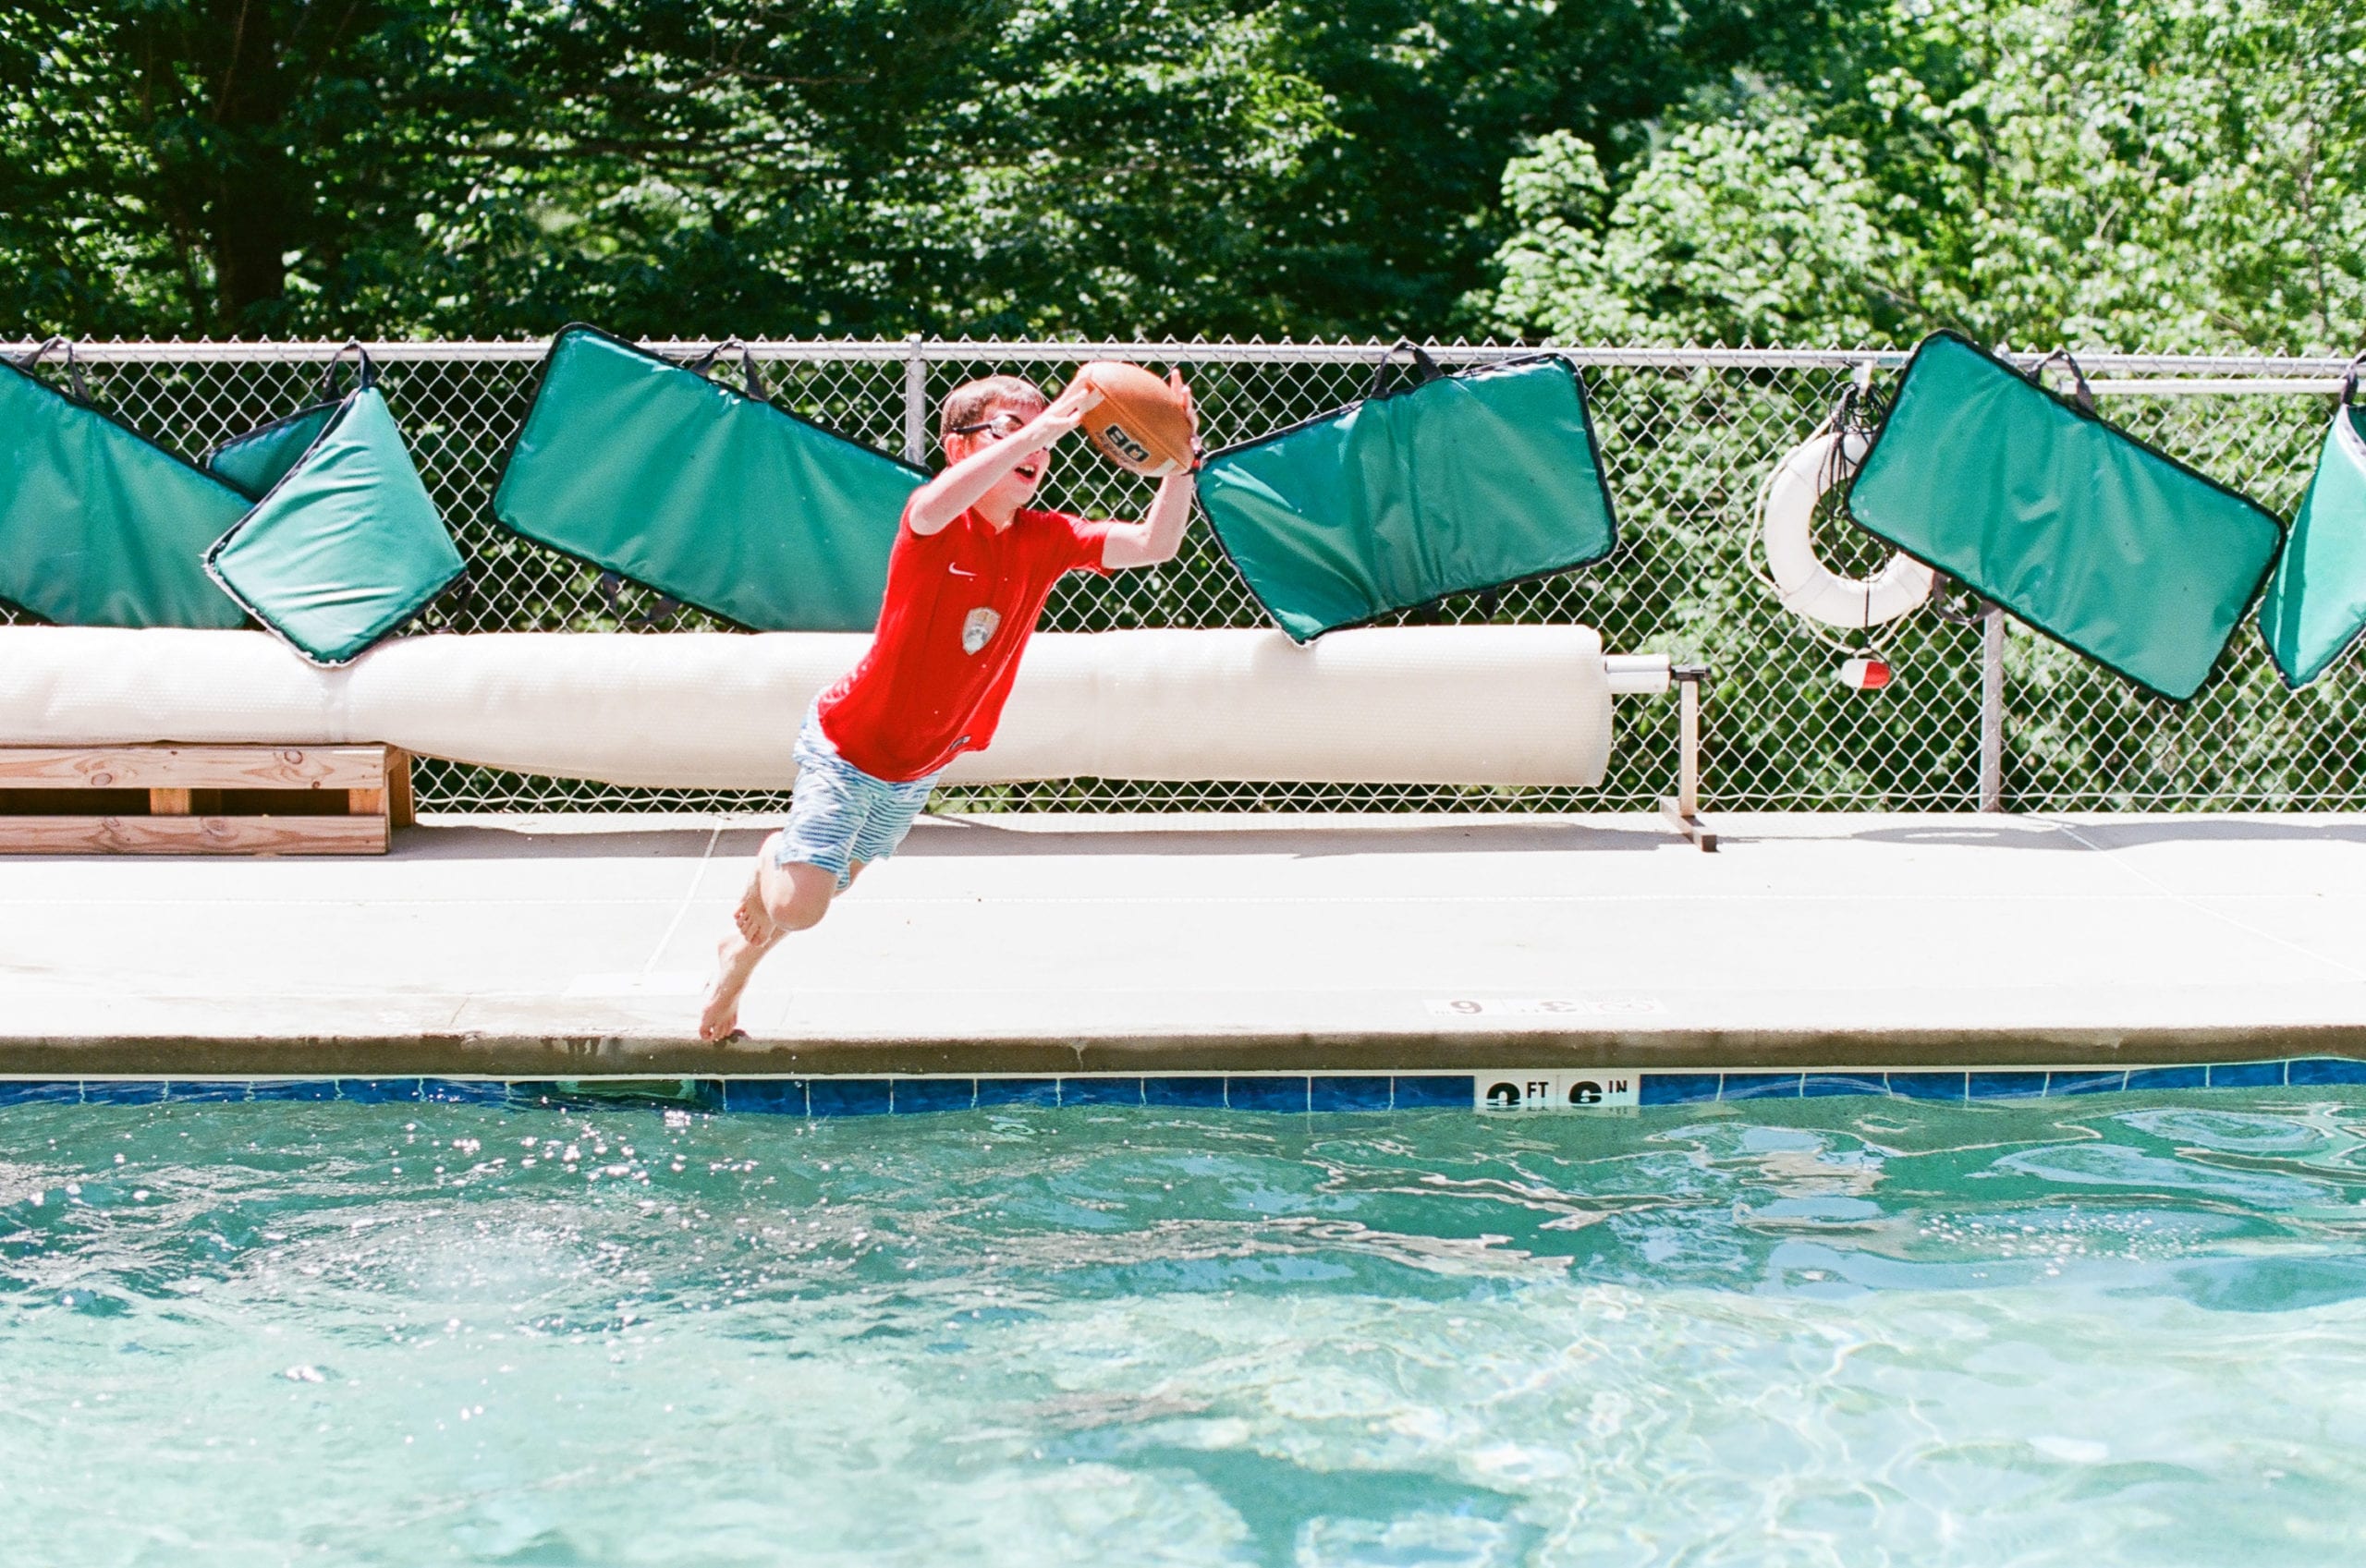 Kodak Ektar 100 Kid jumping in pool for football photo